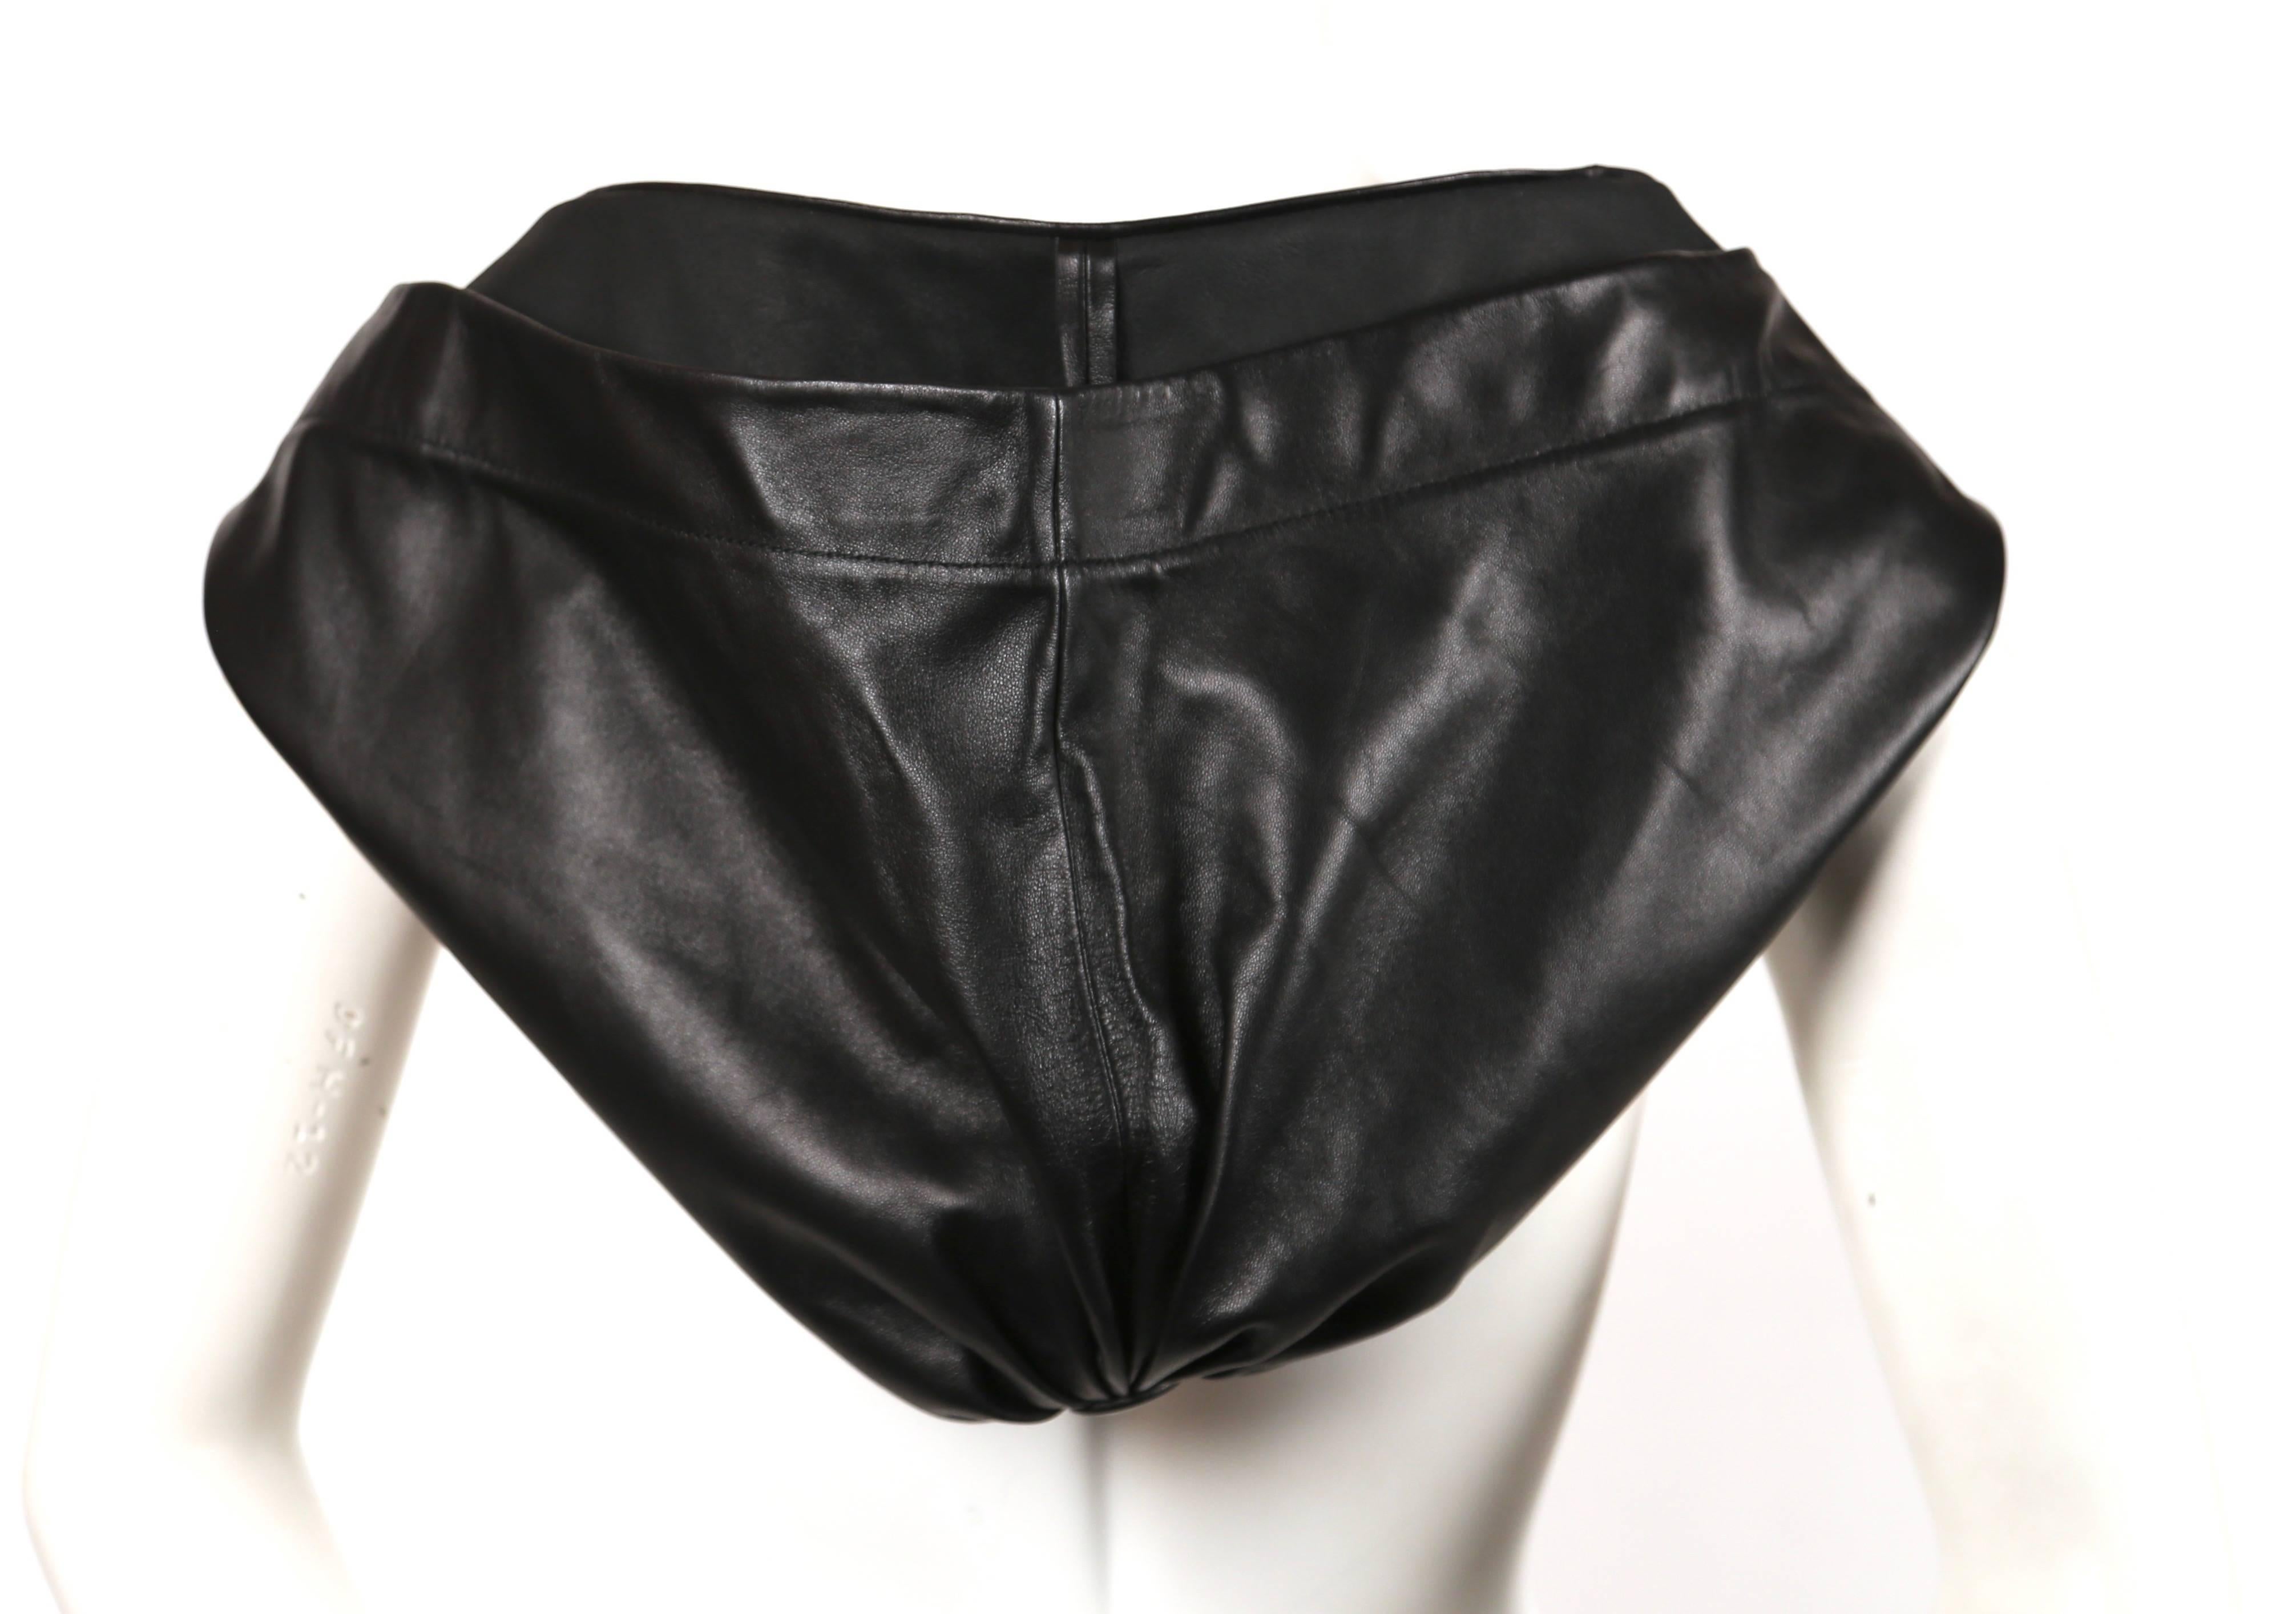 Black CELINE by PHOEBE PHILO black leather hooded runway scarf  - new